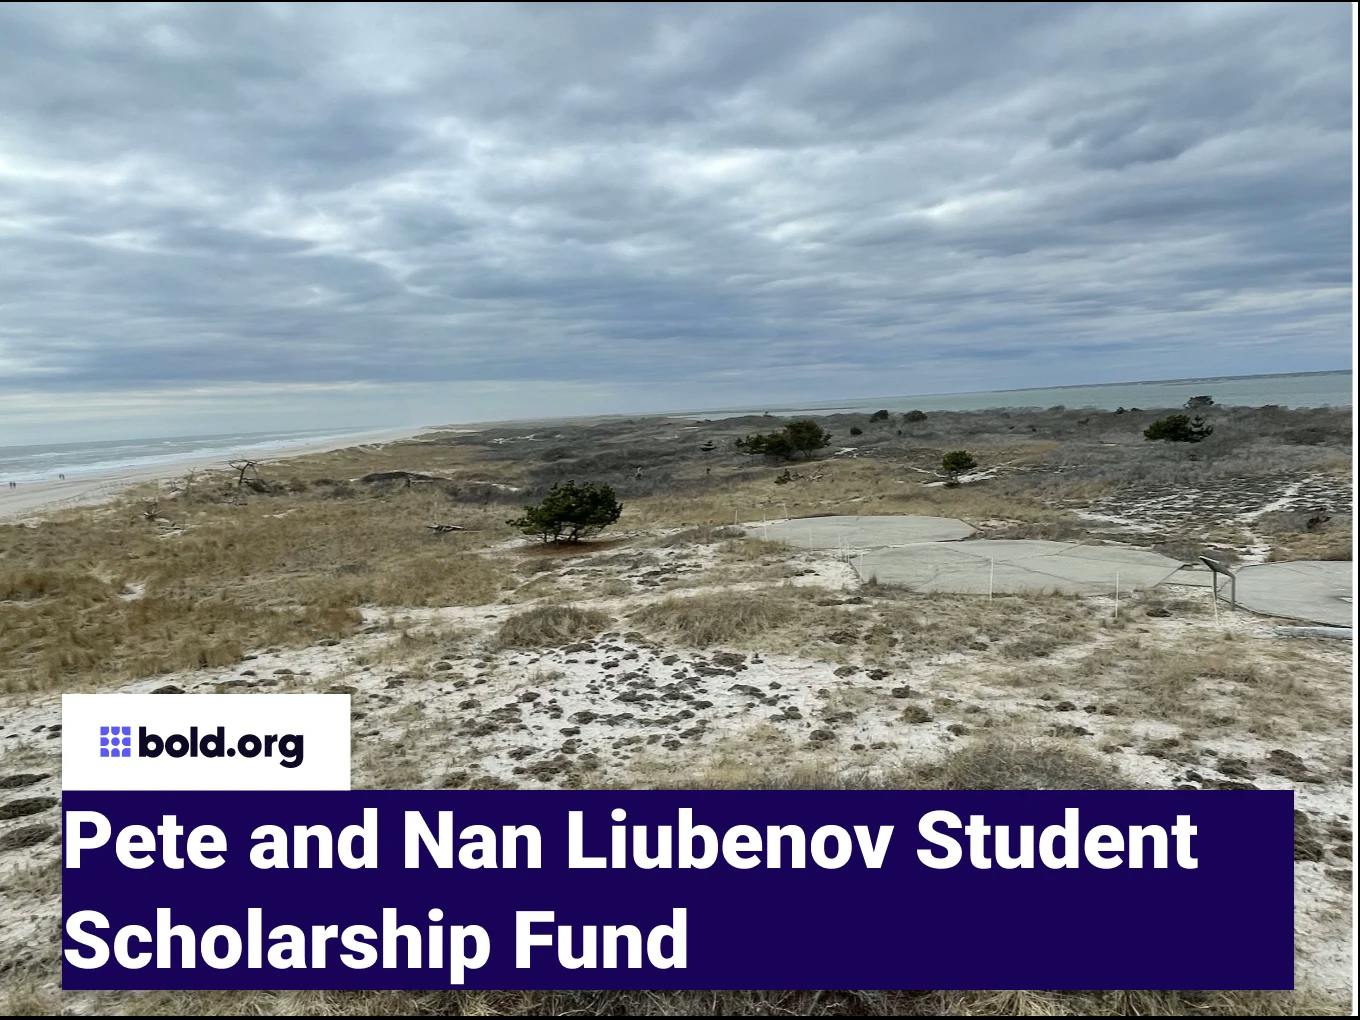 Pete and Nan Liubenov Student Scholarship Fund